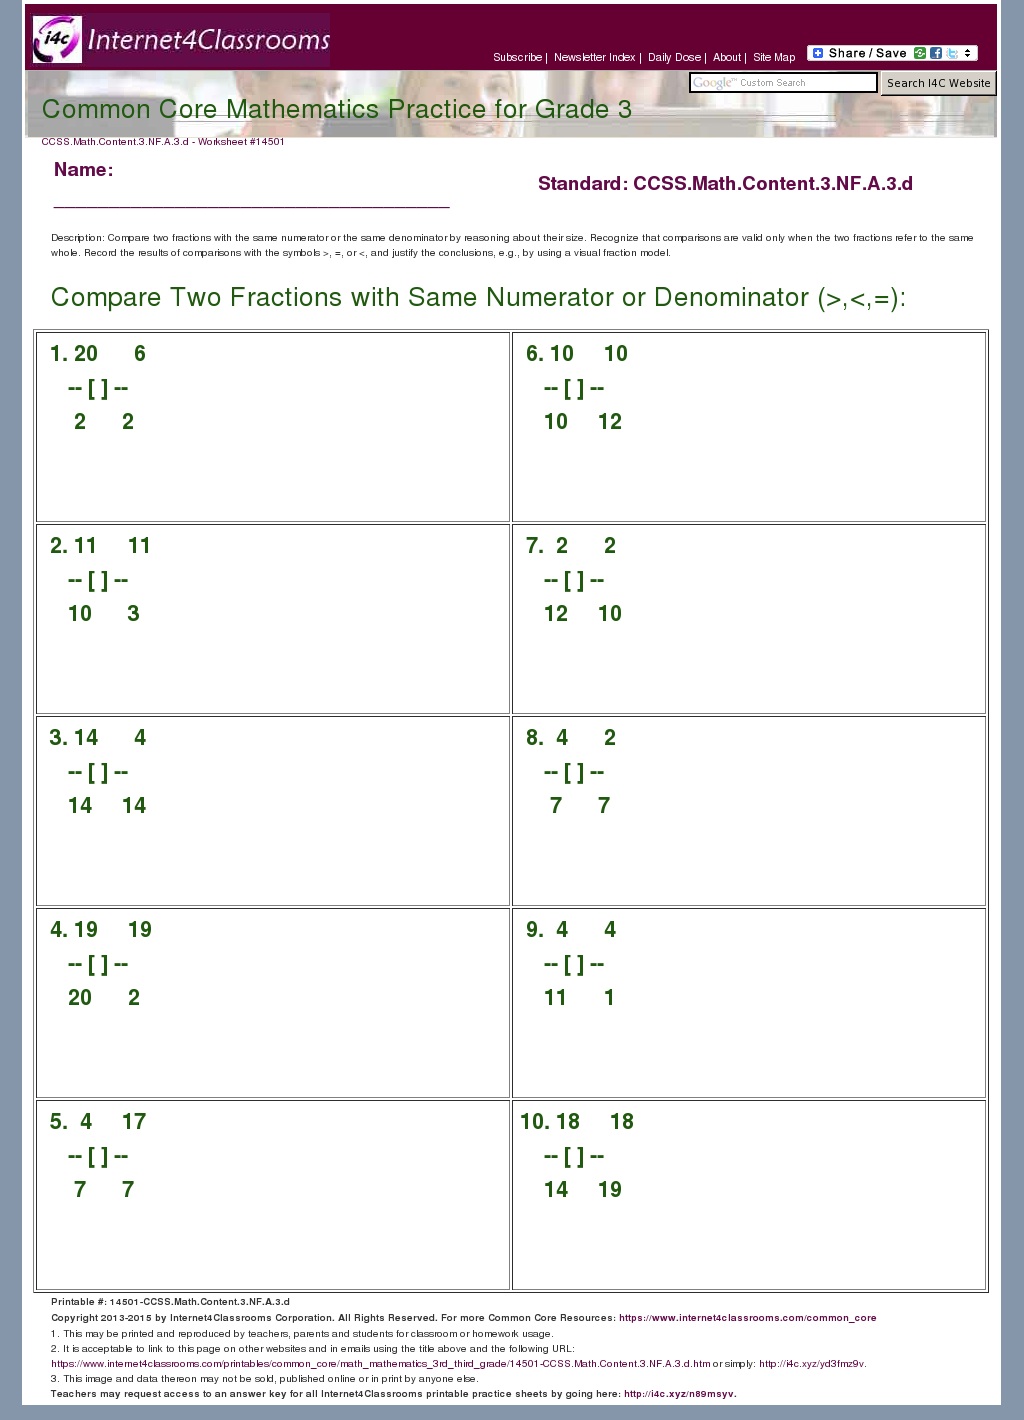 Description Download Worksheet 14501 CCSS Math Content 3 NF A 3 d